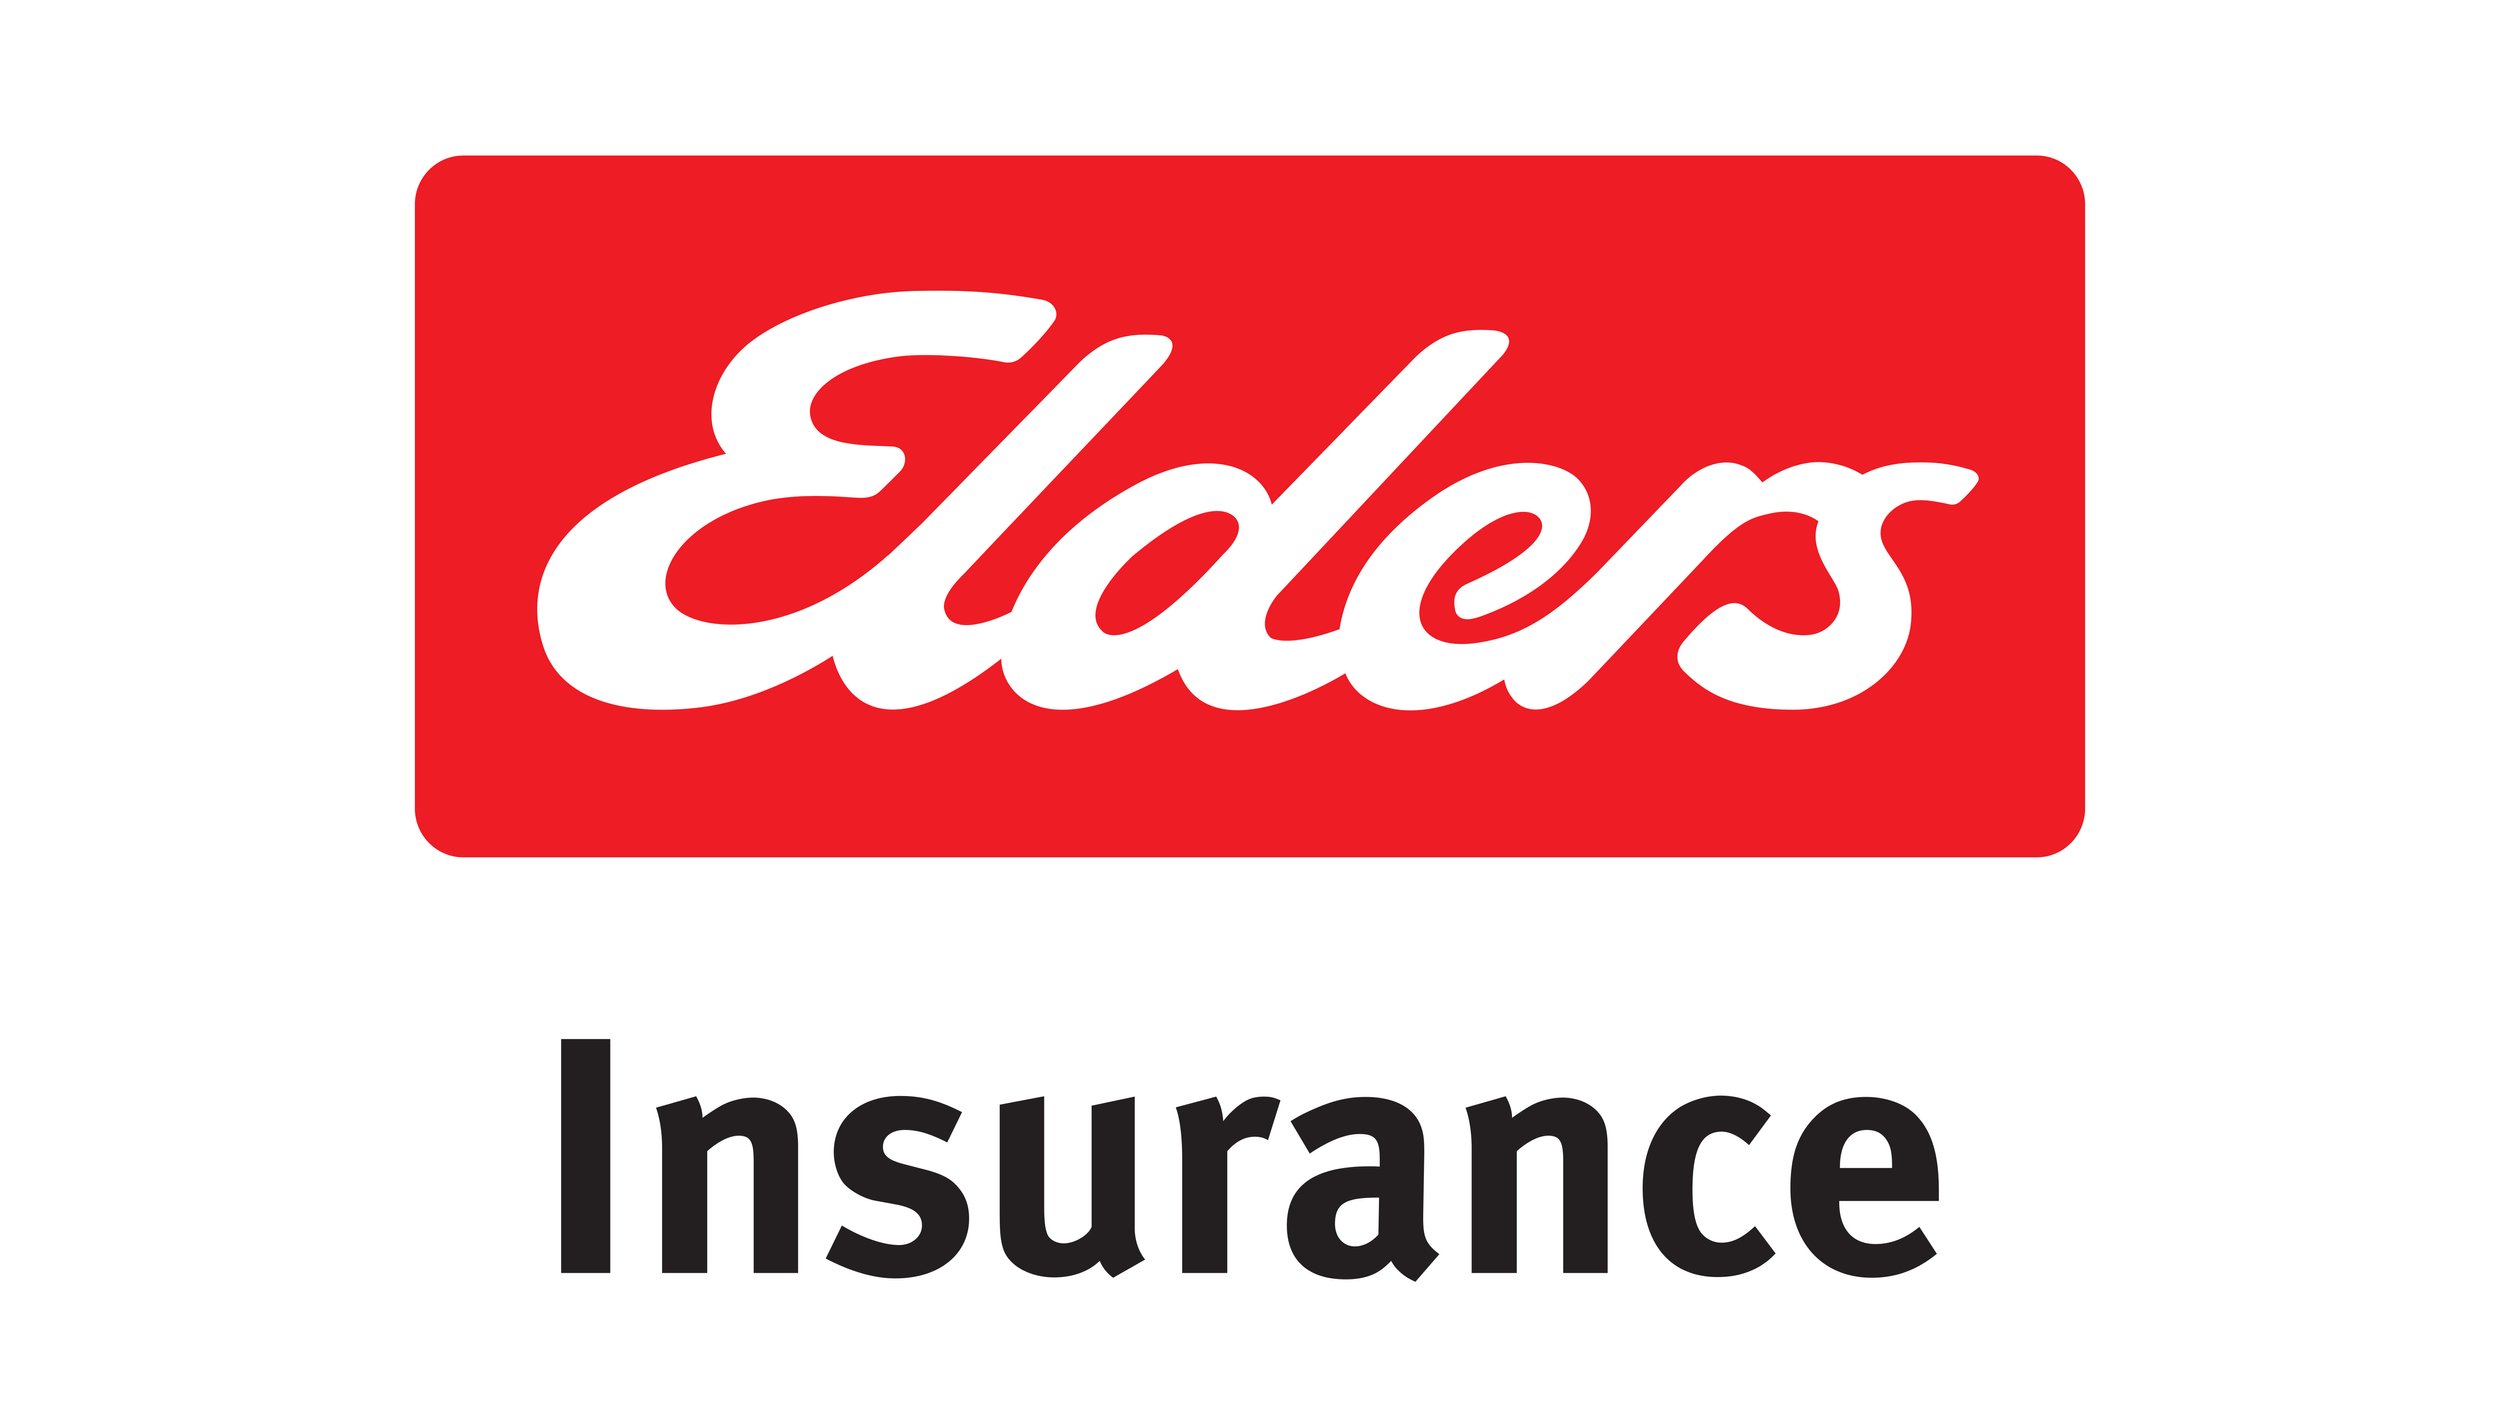 Elders Insurance.jpg